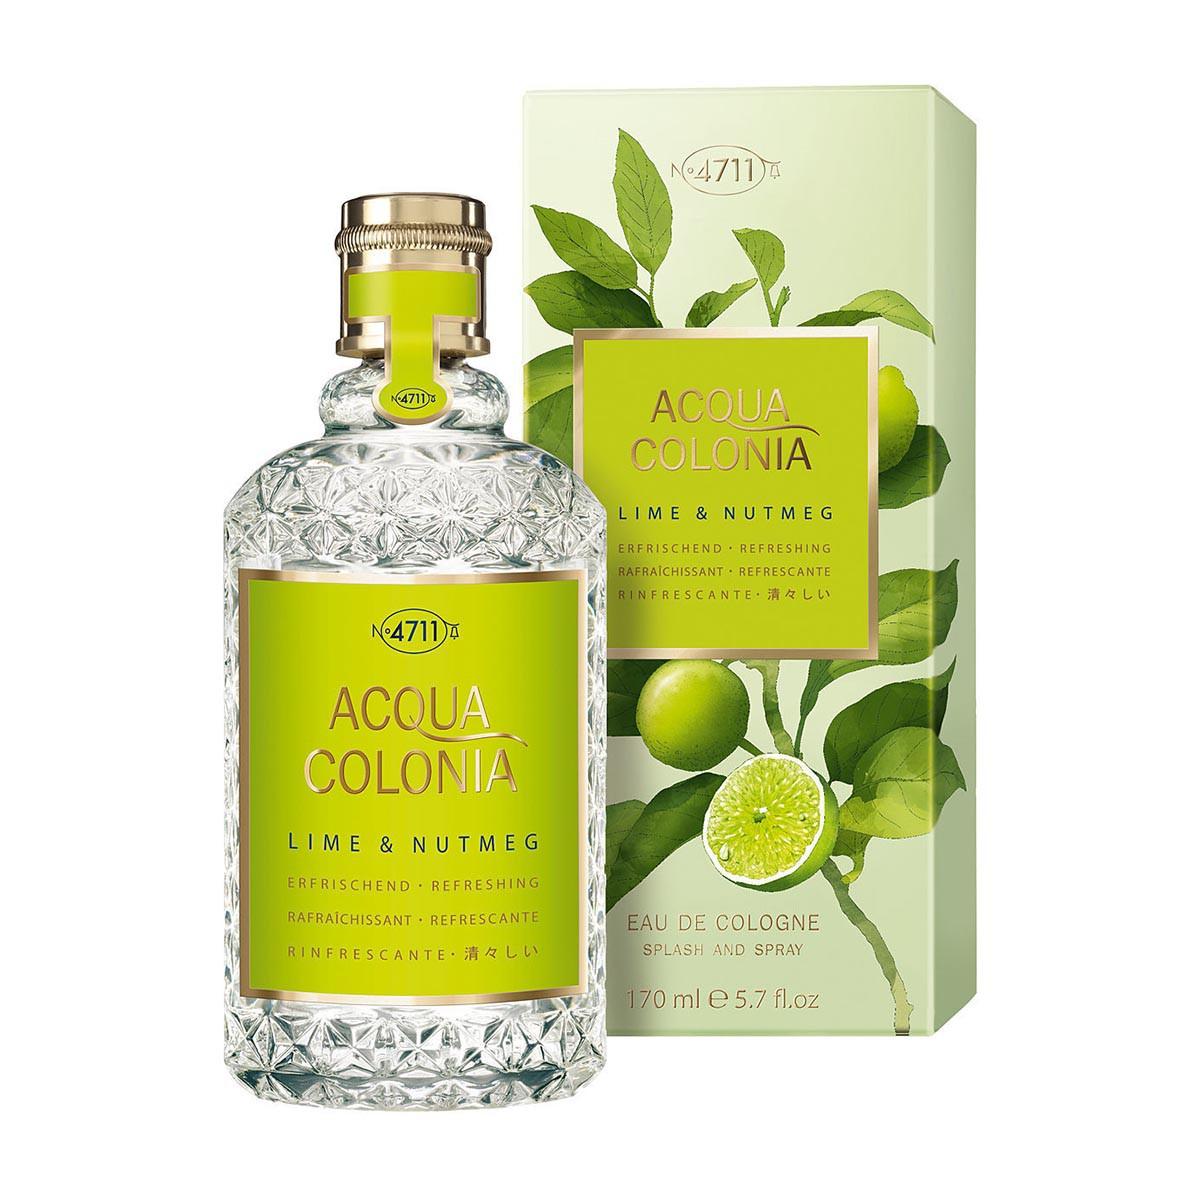 4711-fragrances-parfume-acqua-colonia-lime-nutmeg-natural-spray-eau-de-cologne-170ml